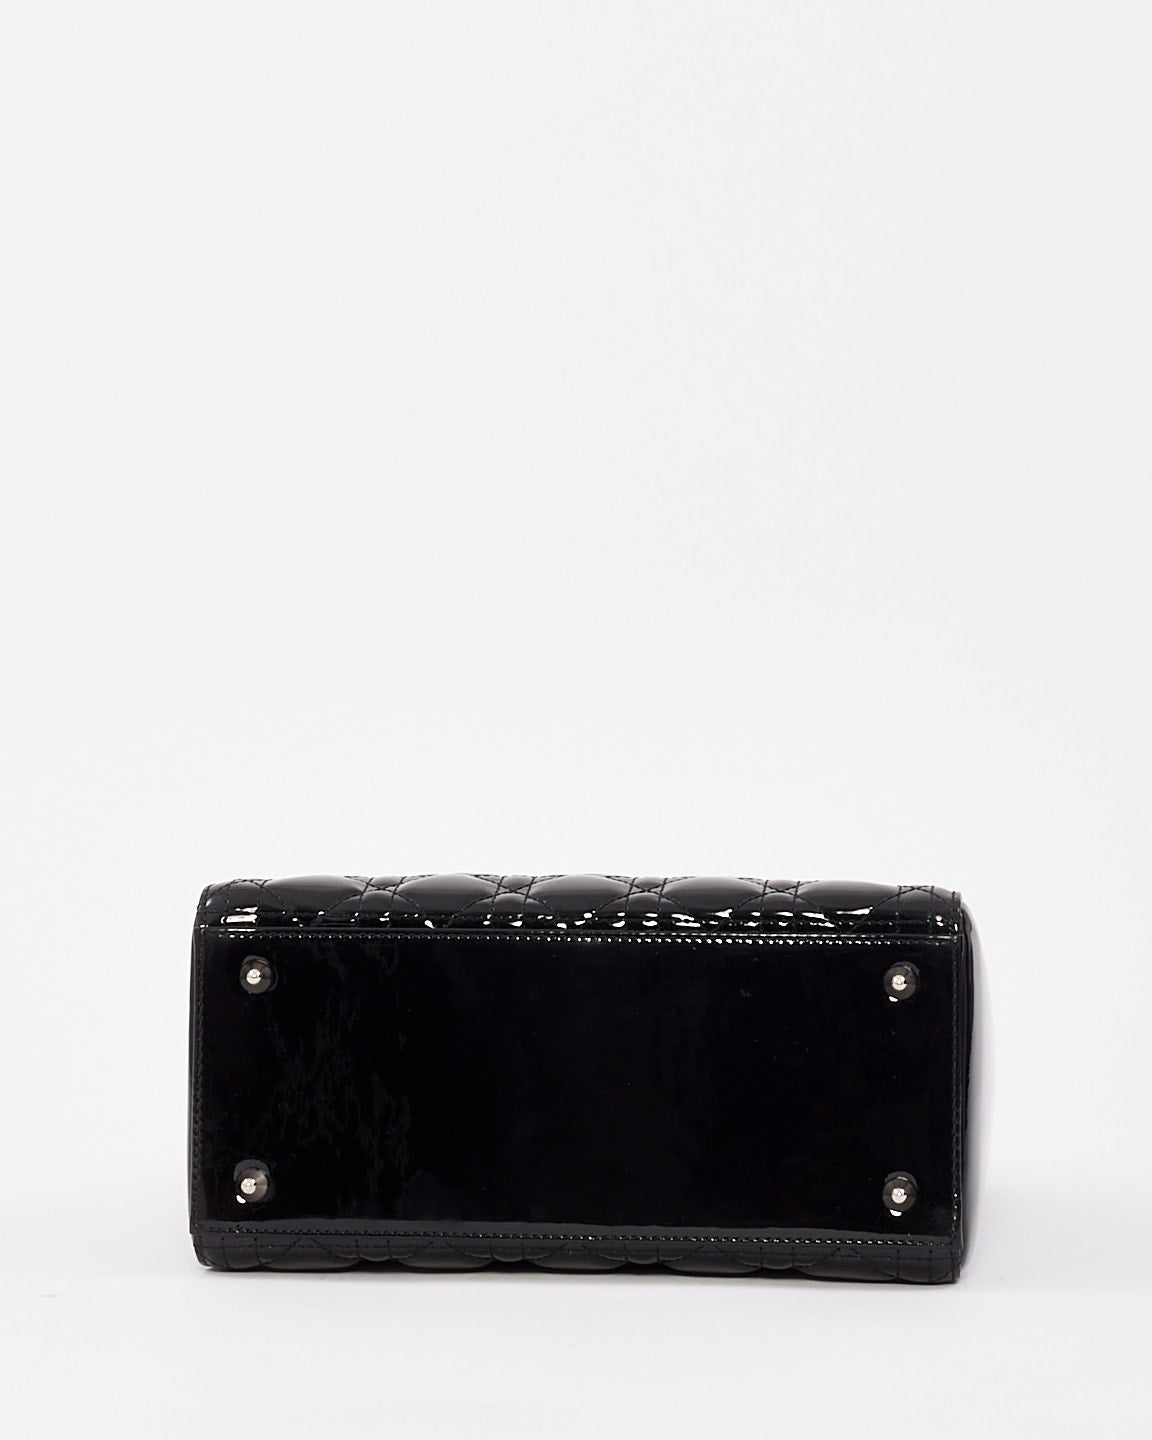 Dior Black Patent Leather Medium Lady Dior Bag